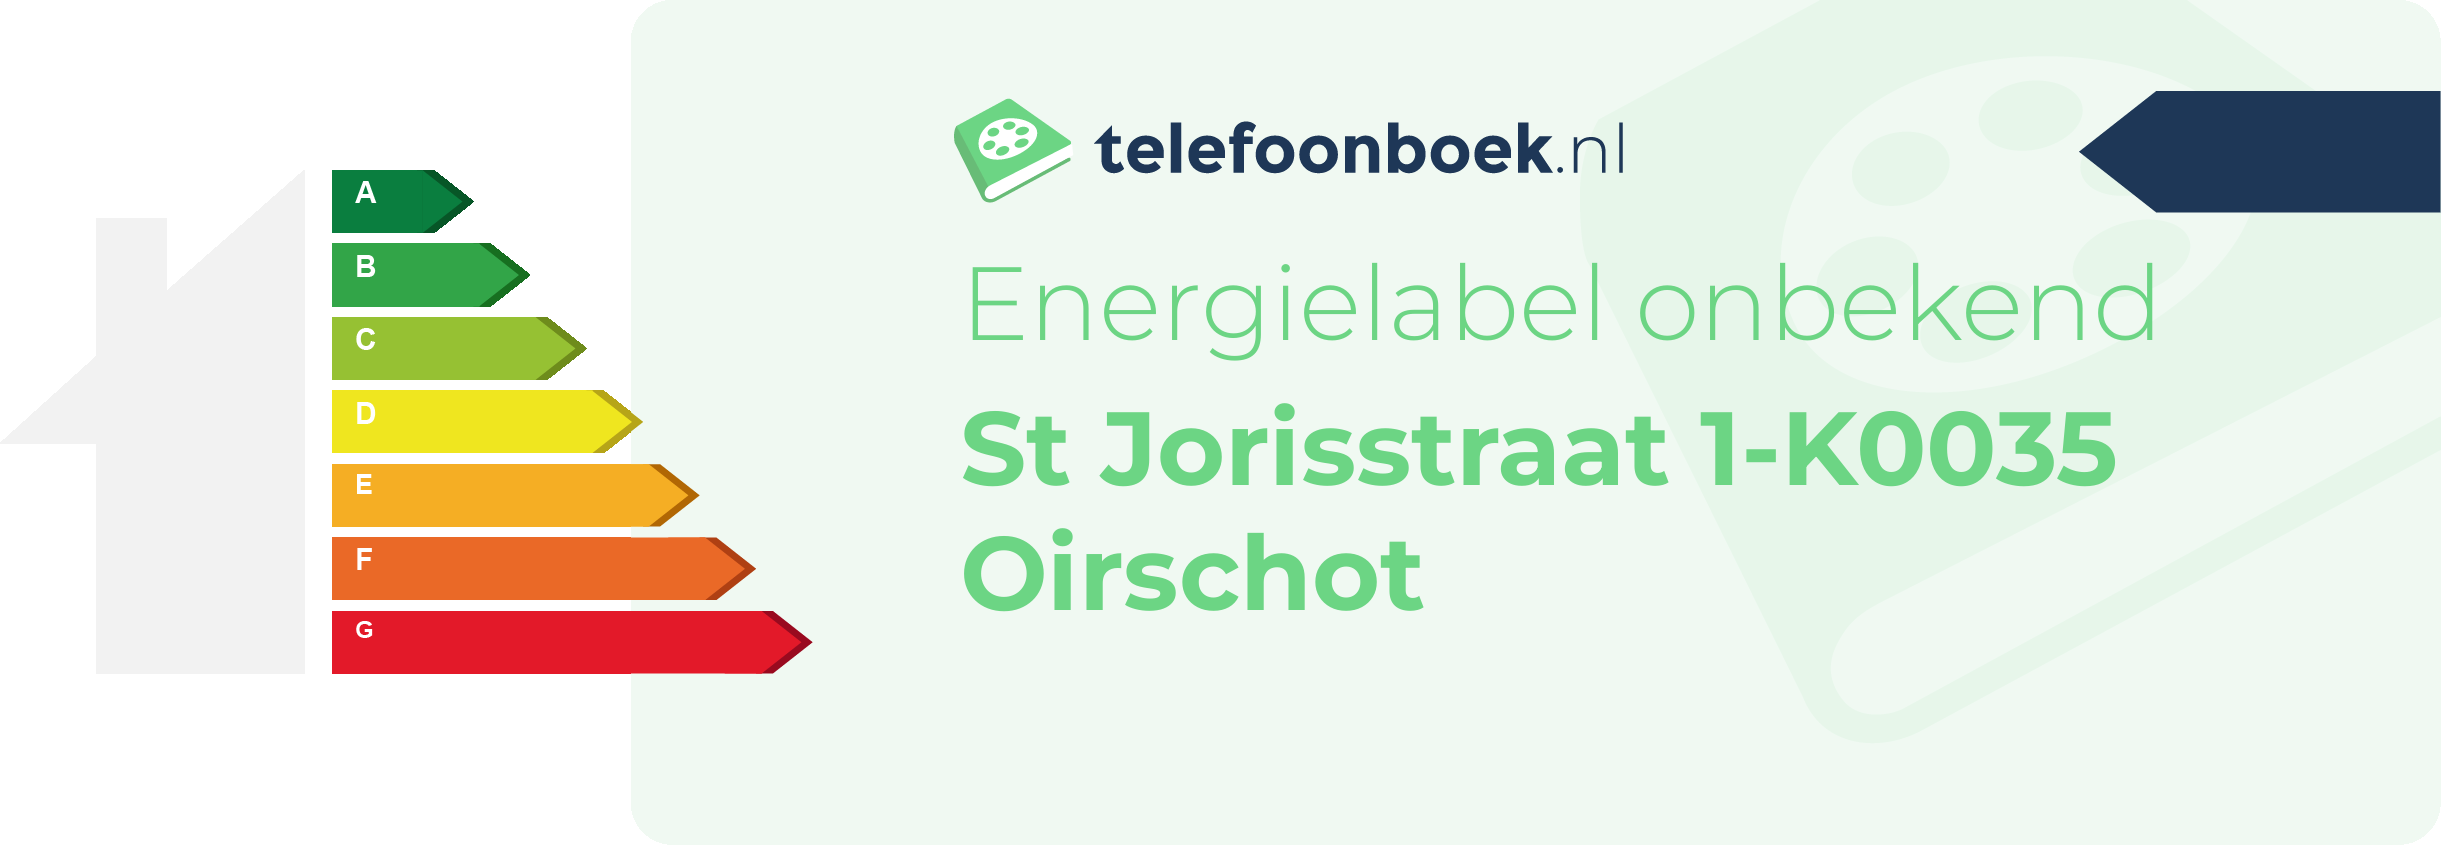 Energielabel St Jorisstraat 1-K0035 Oirschot